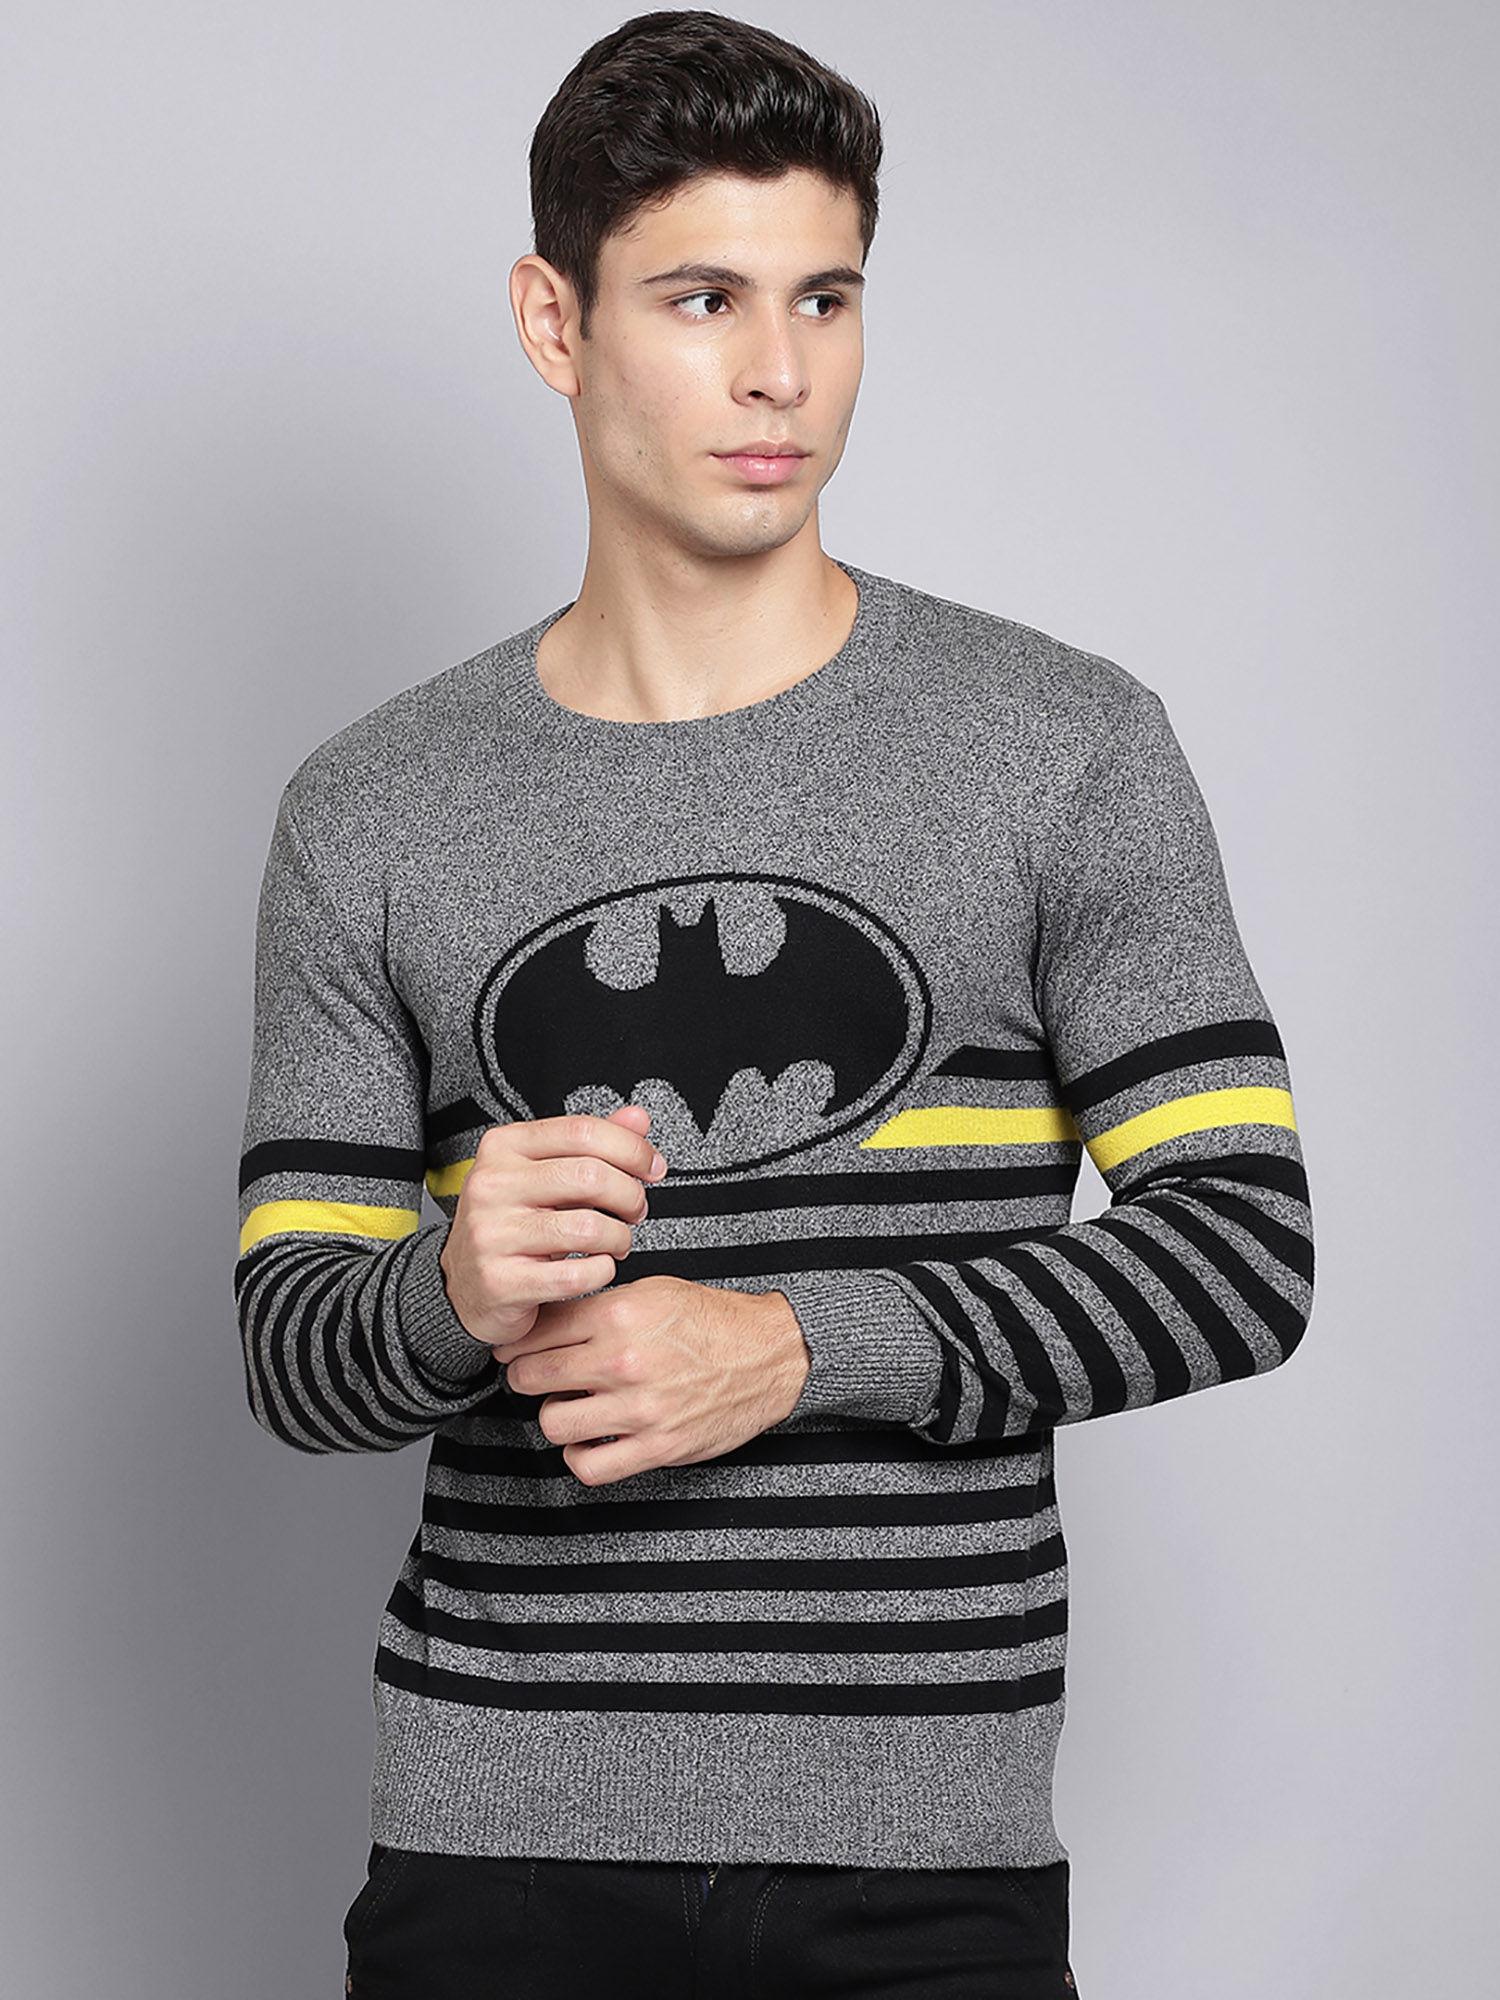 batman featured grey sweater for men